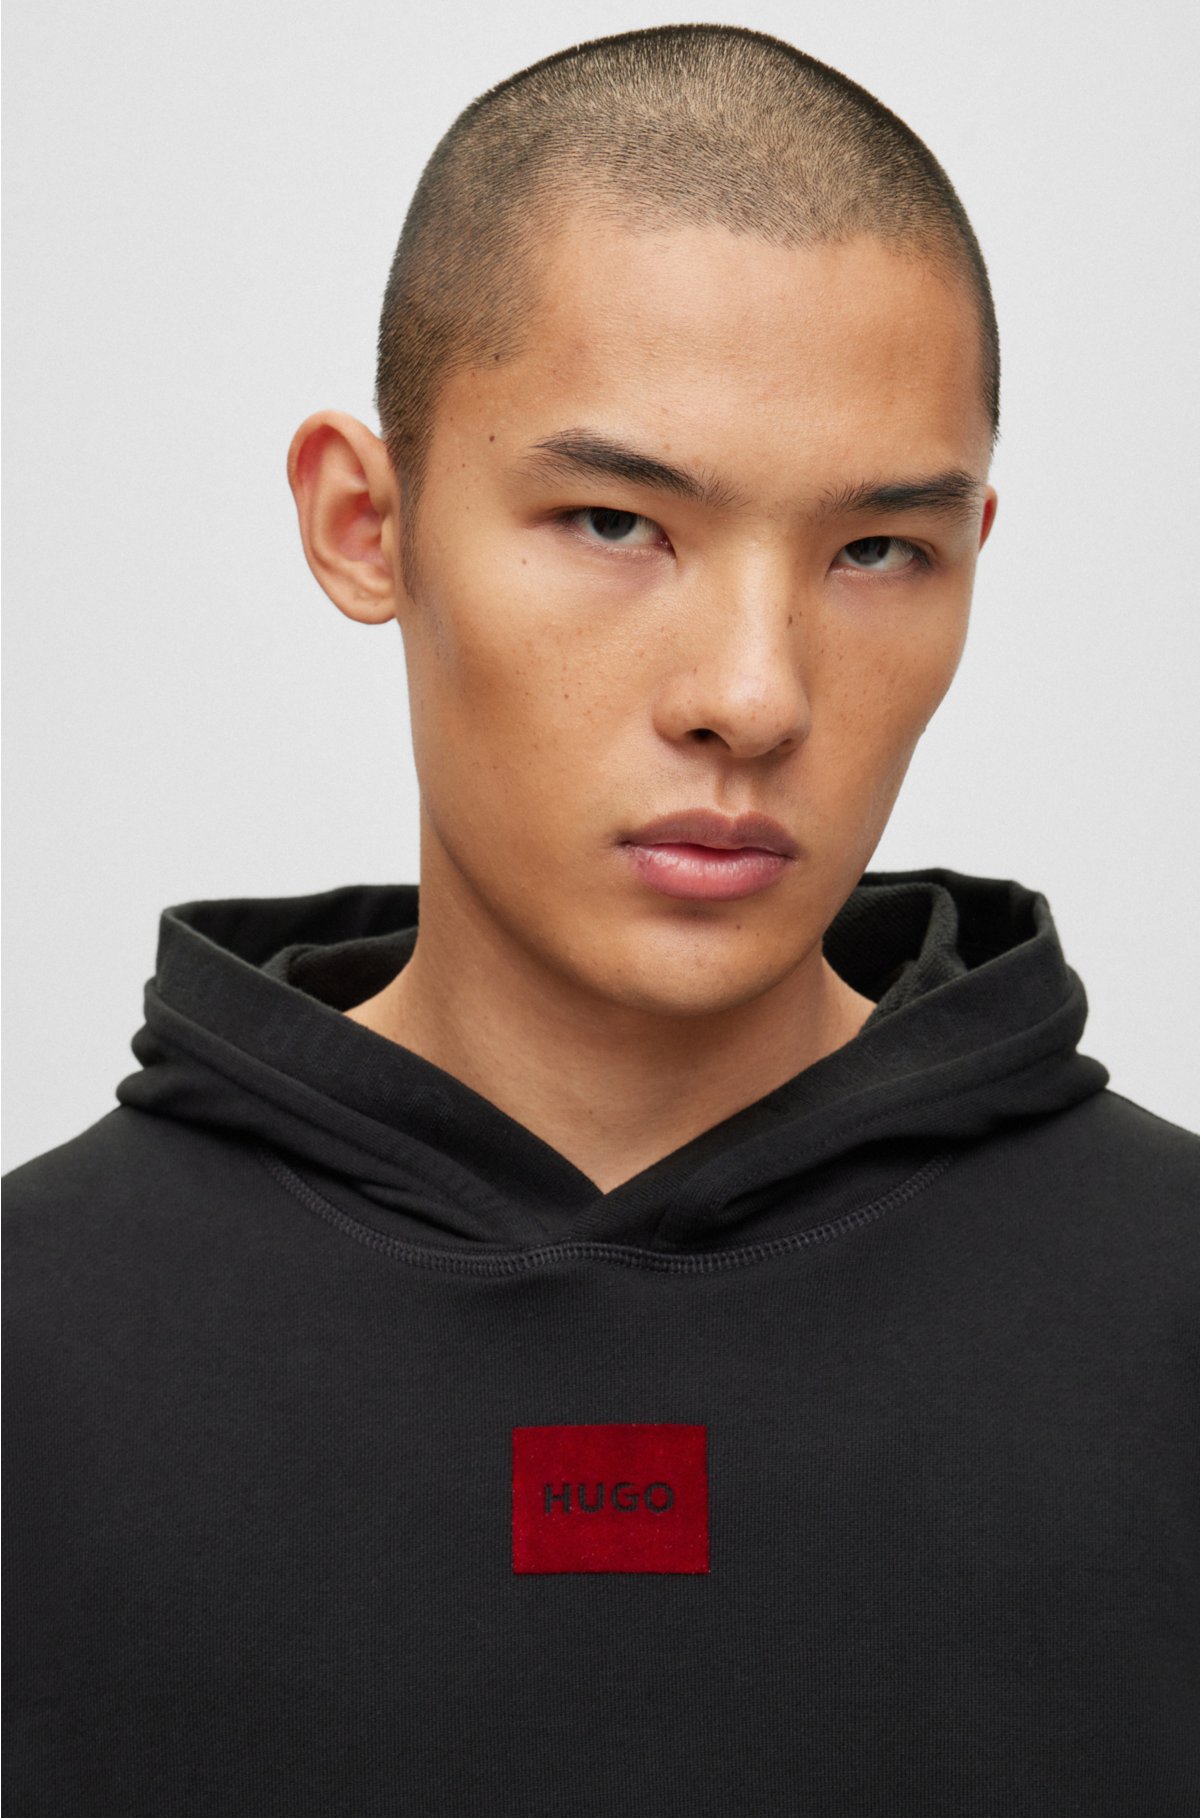 HUGO - Cotton-terry regular-fit hoodie with flock-print logo